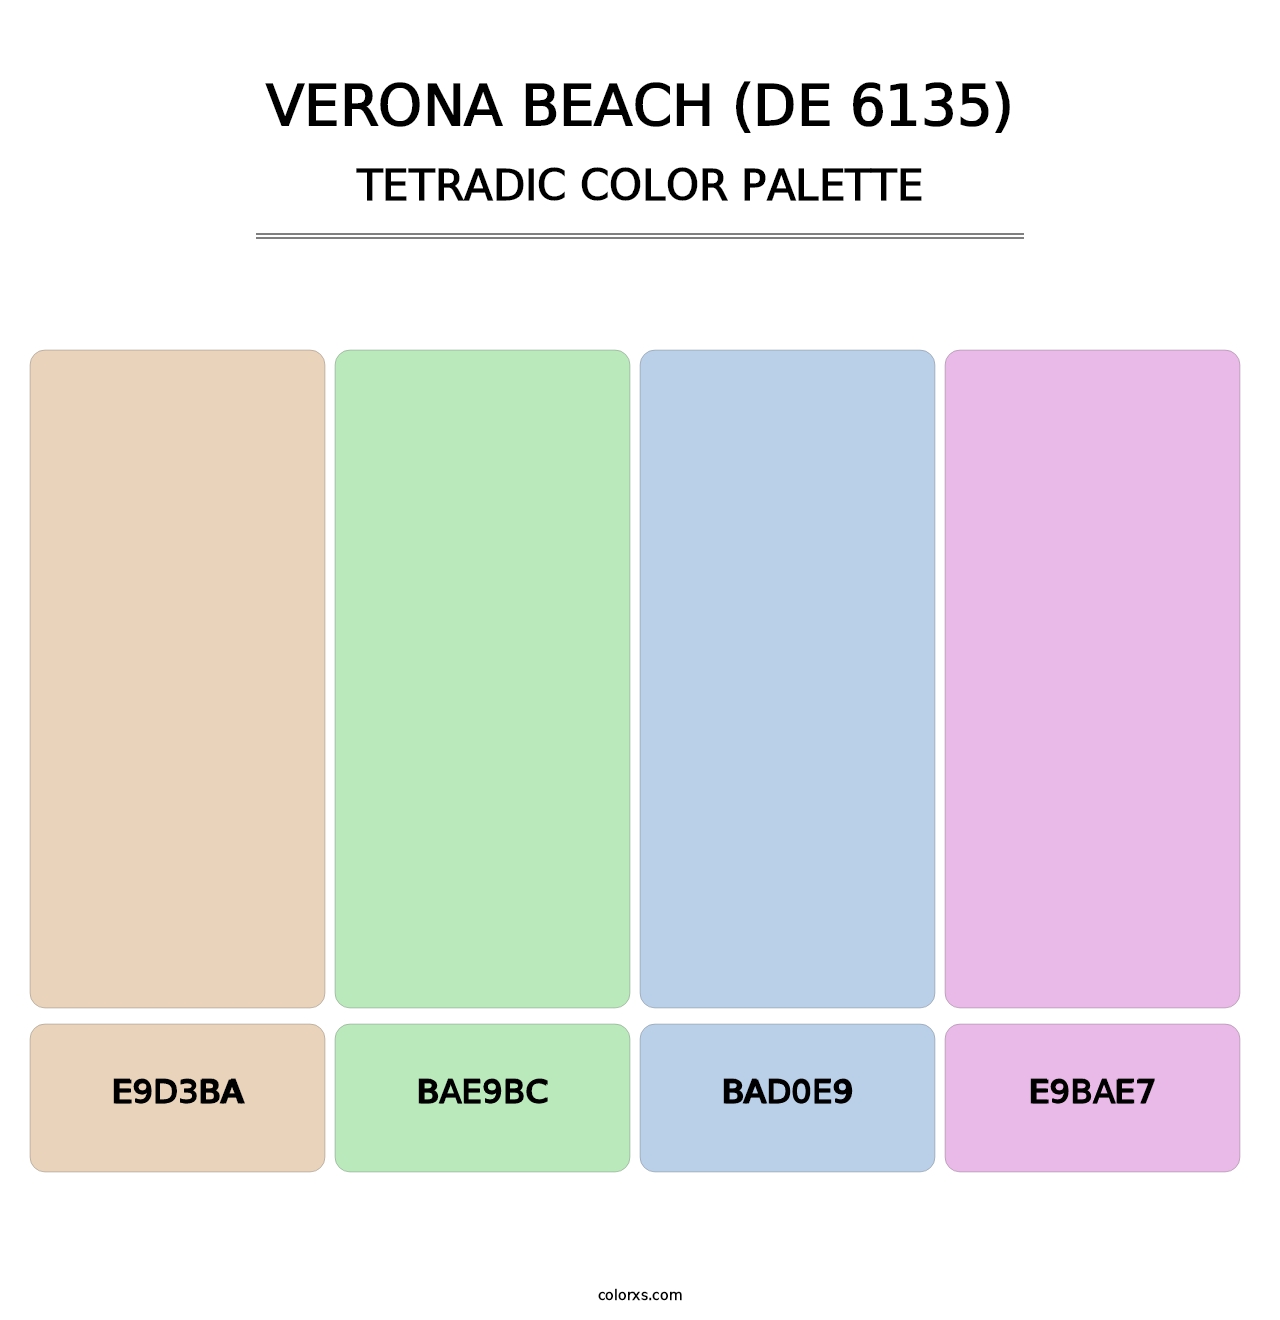 Verona Beach (DE 6135) - Tetradic Color Palette